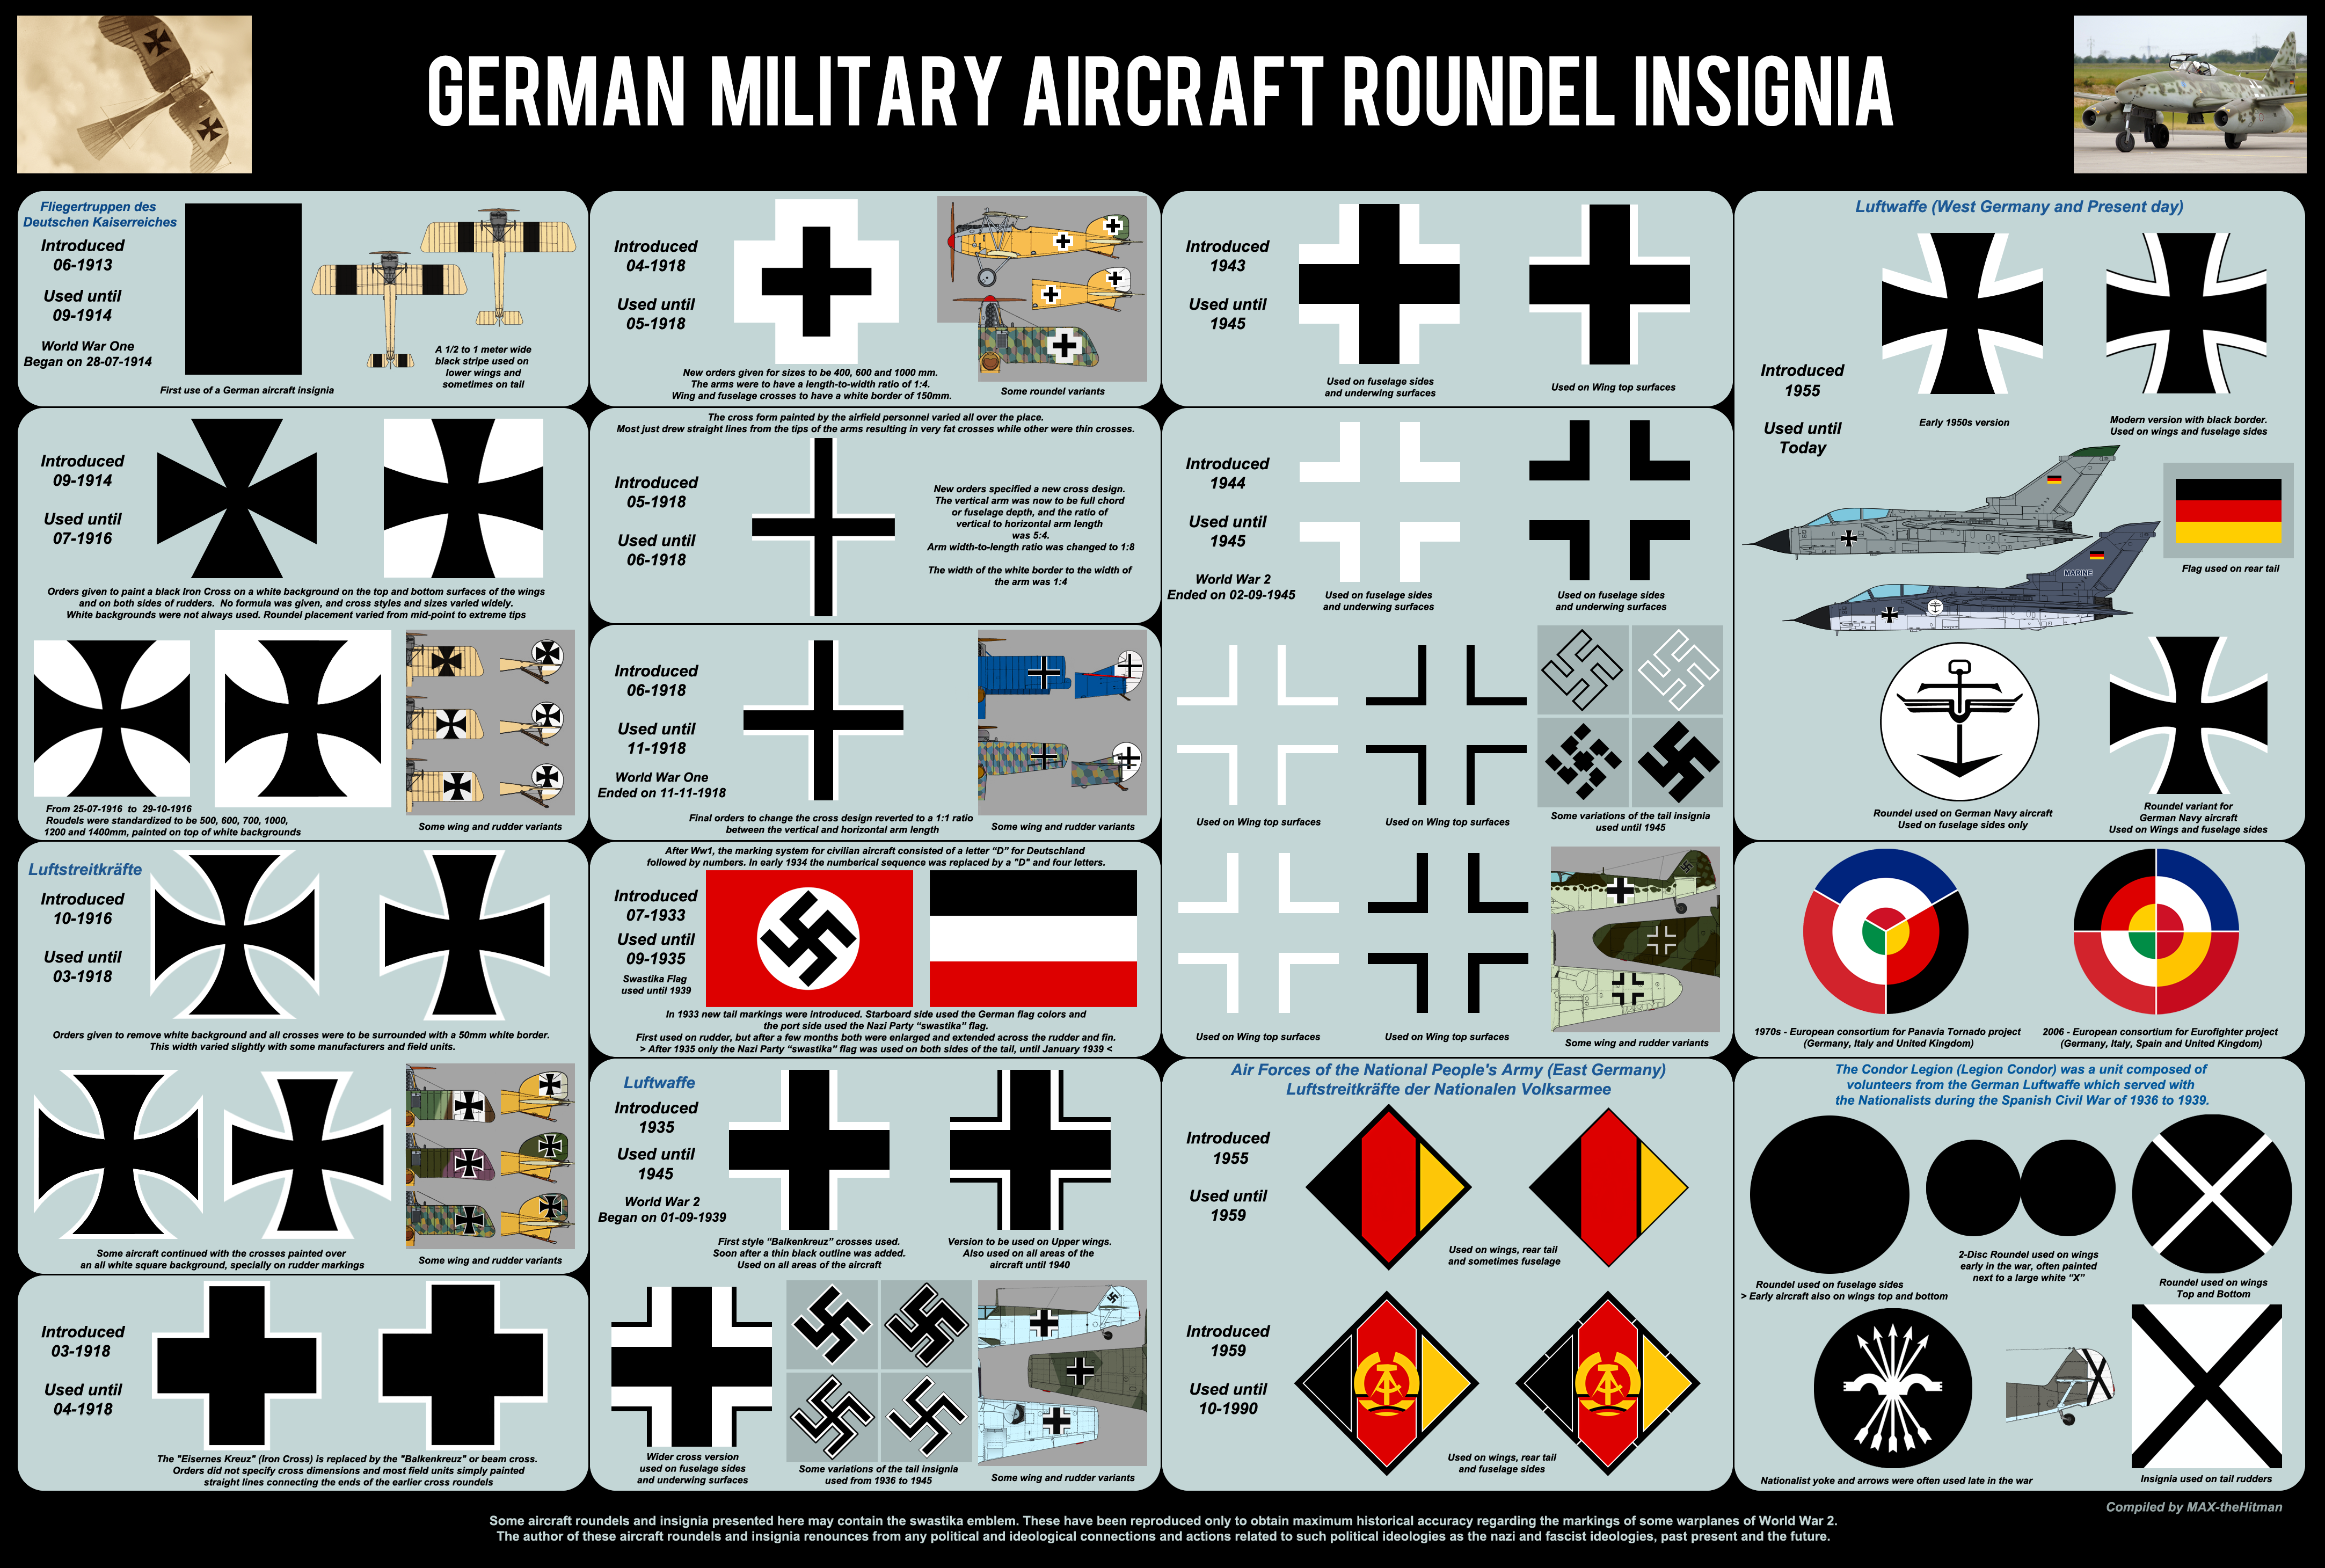 German air force roundel